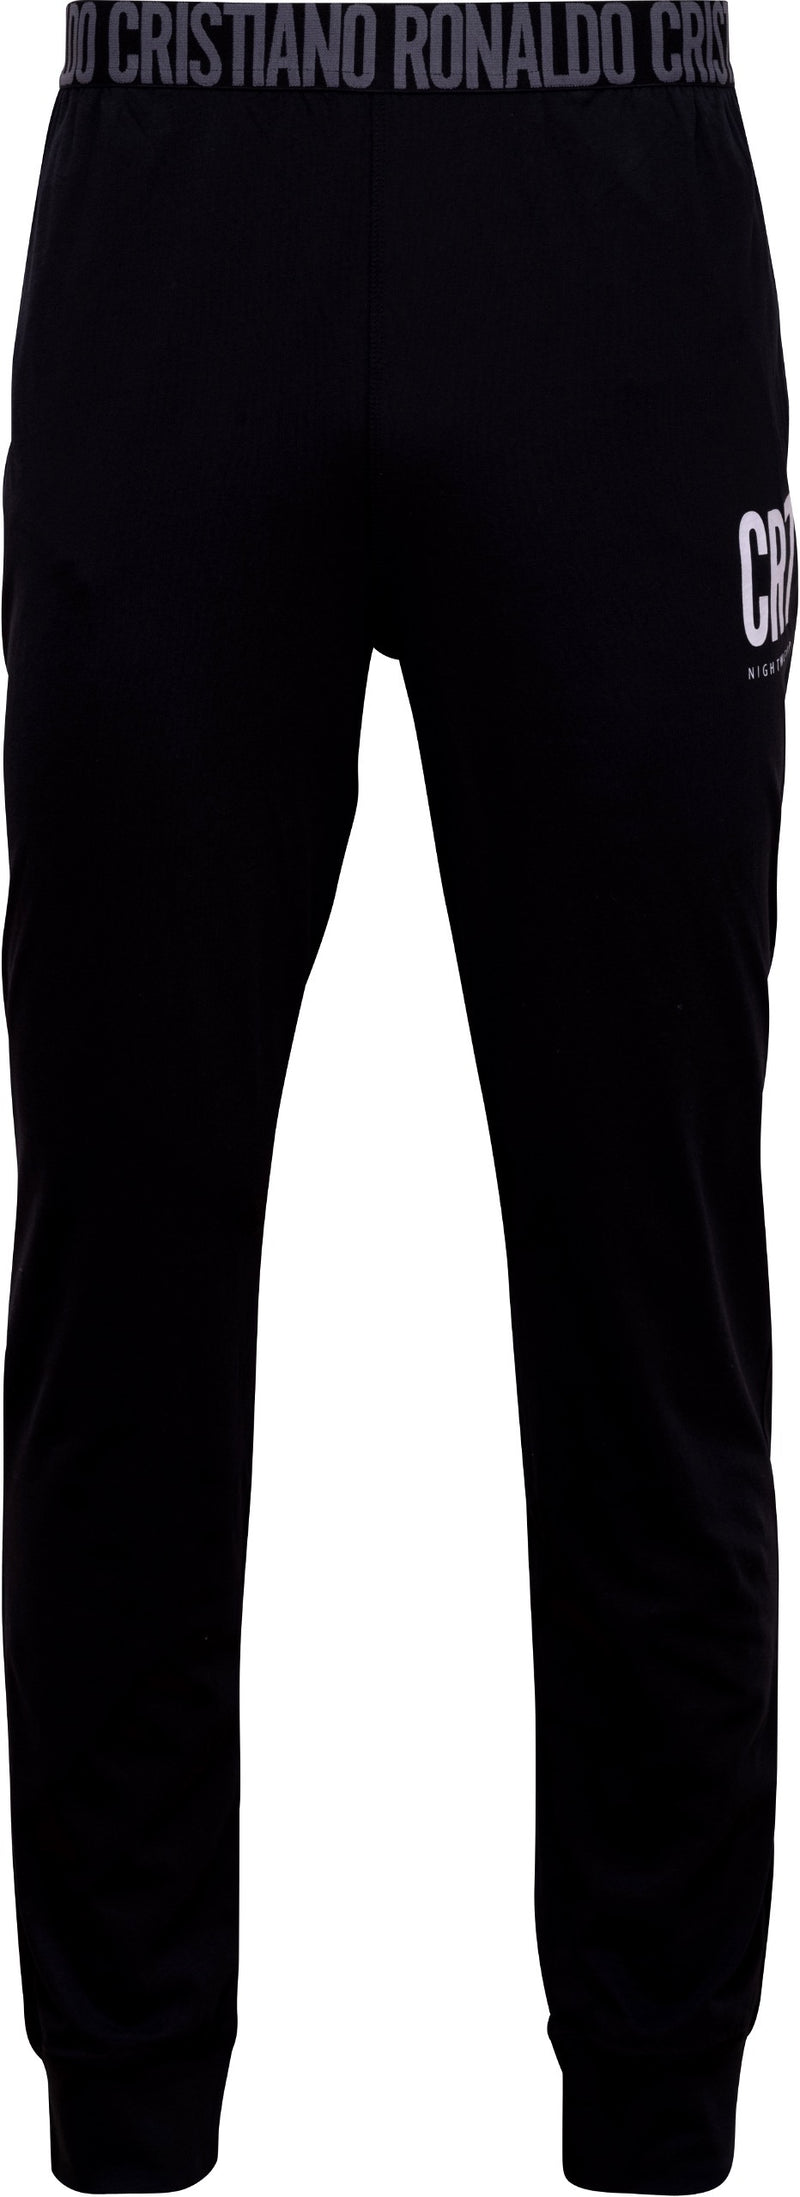 CR7 Boy's Loungewear Set - Pants, Long Sleeve